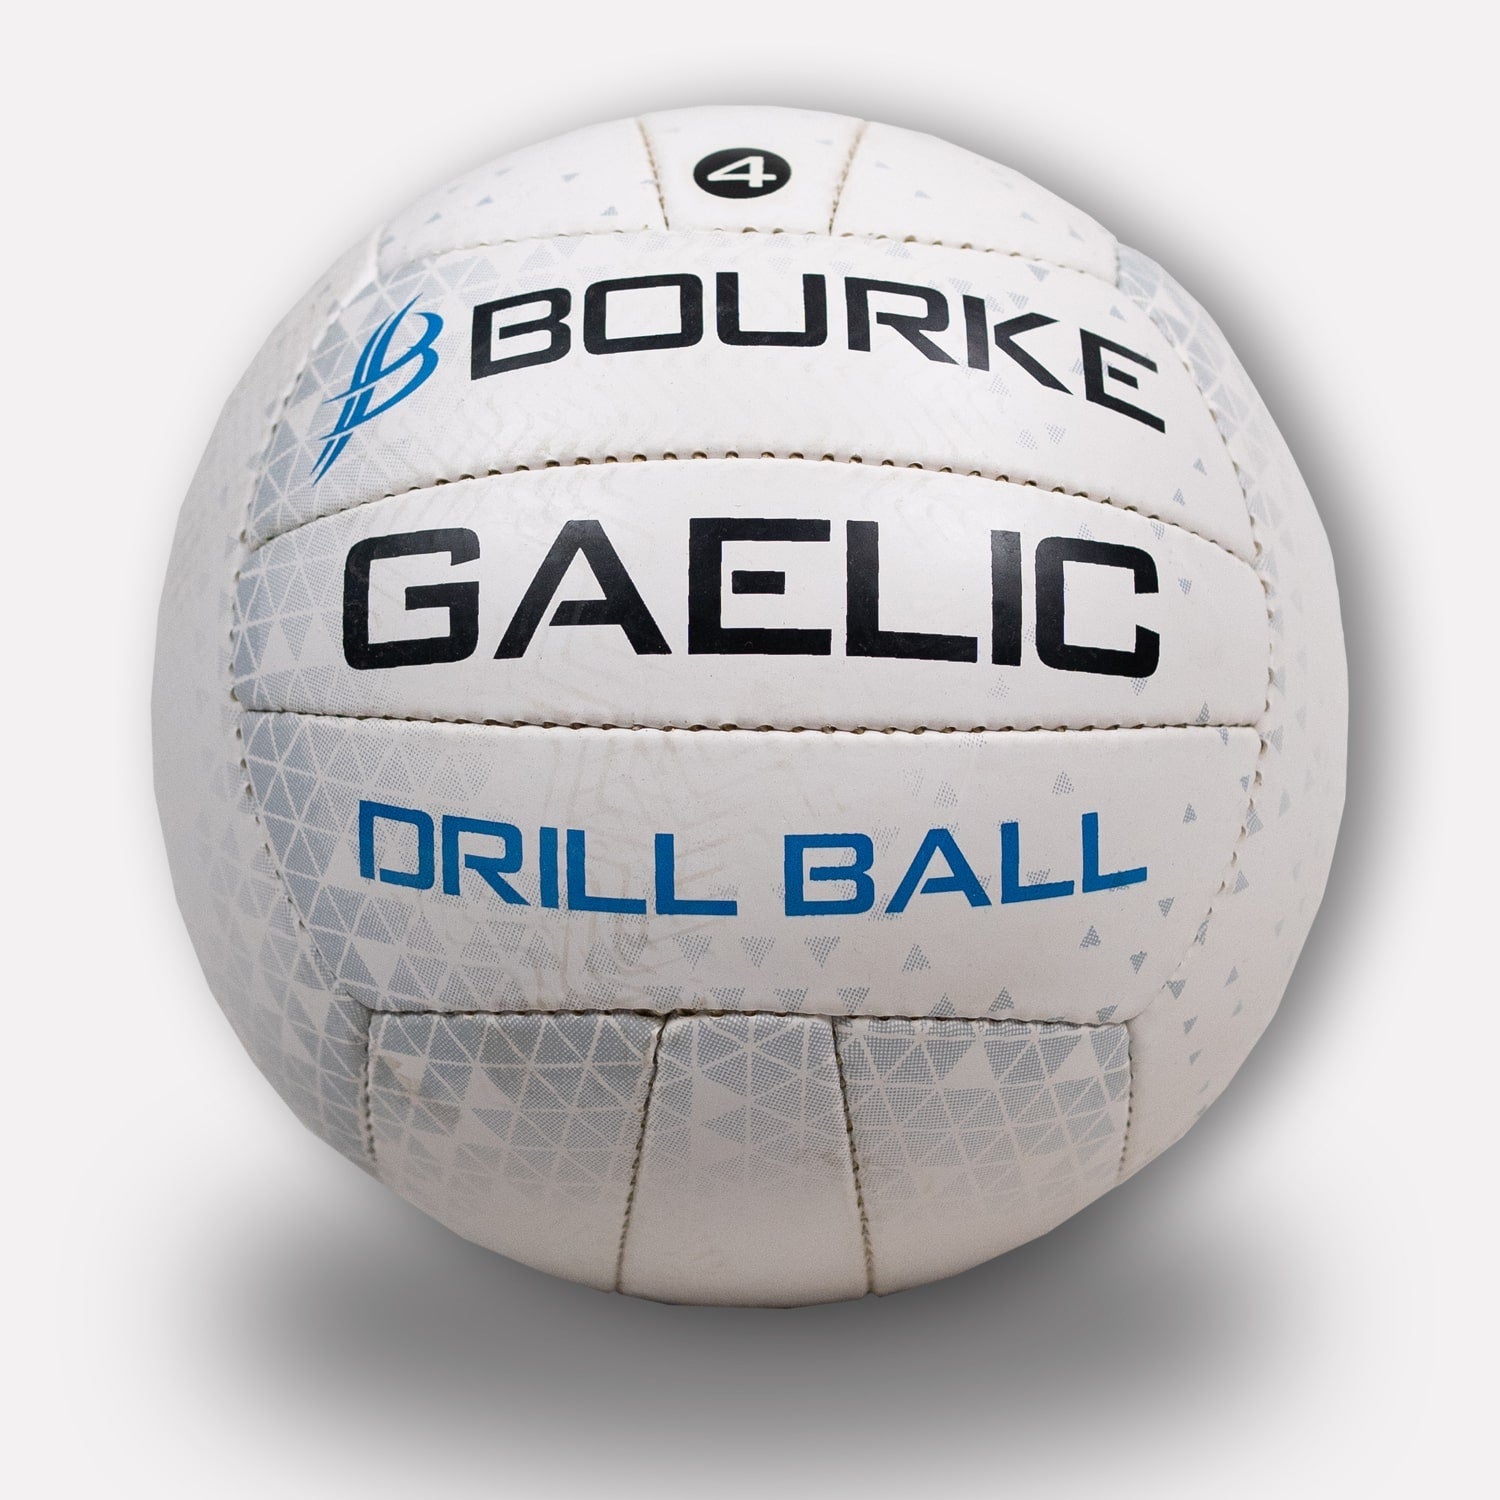 Bourke Sports Gaelic Football Size 5 & 4 (Drill Ball)